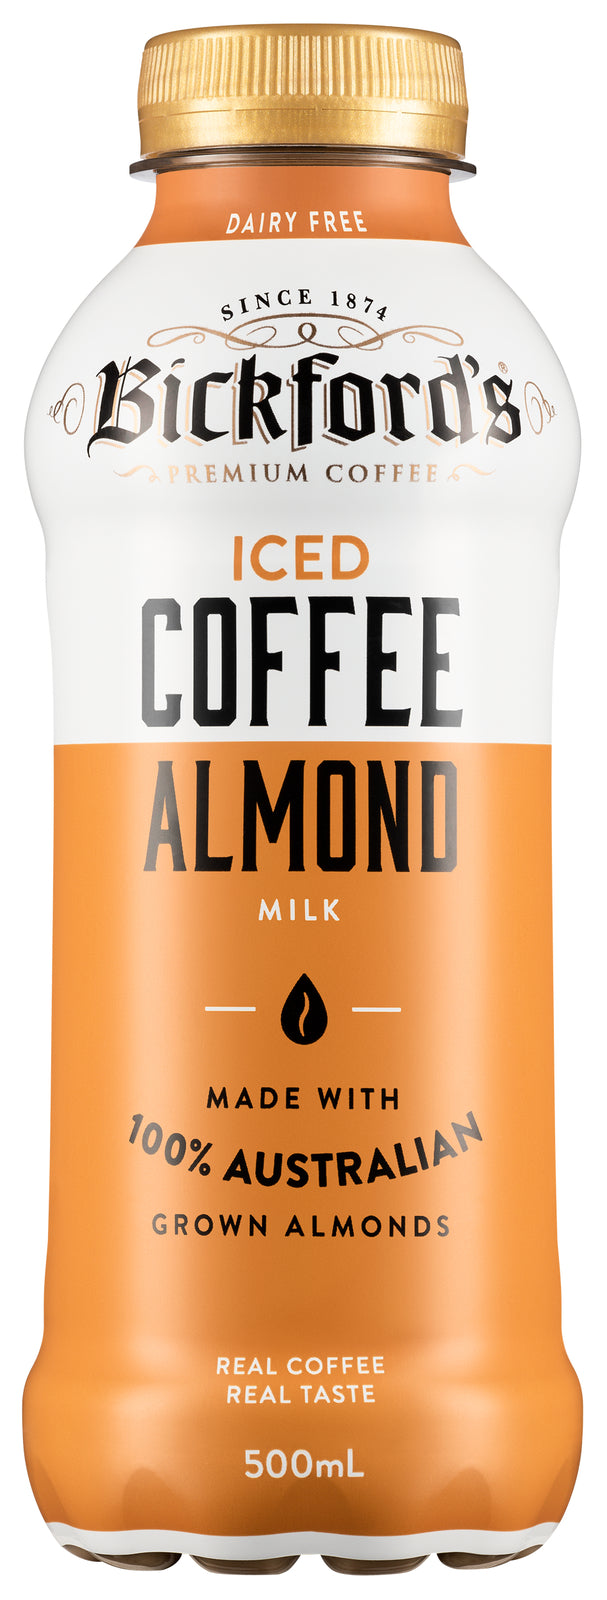 Bickford's Iced Coffee - Almond 500ml (12 Pack)